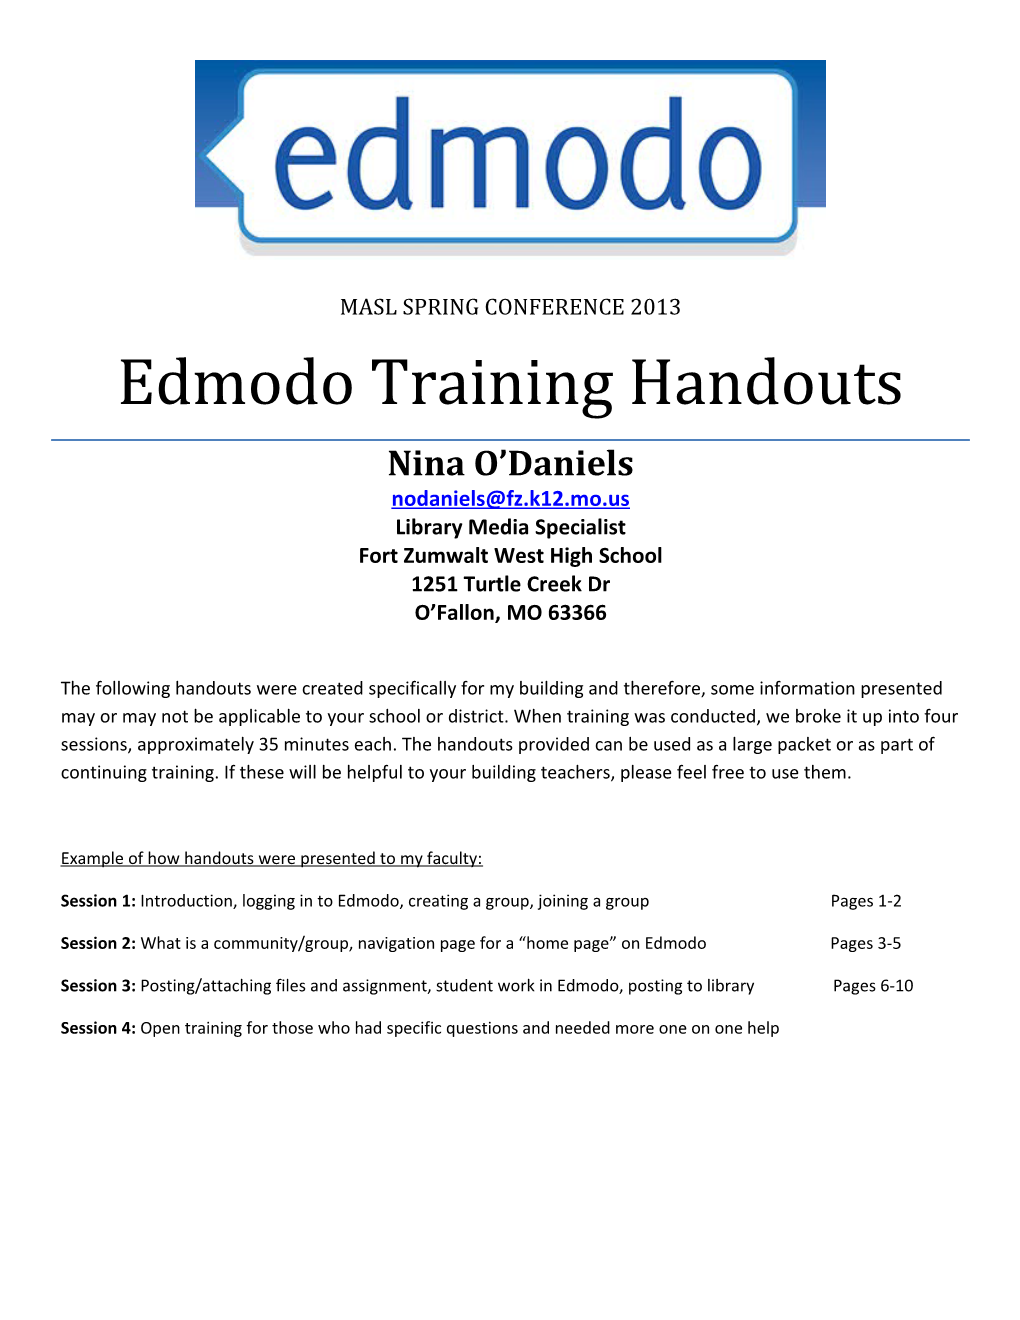 Edmodo Training Handouts